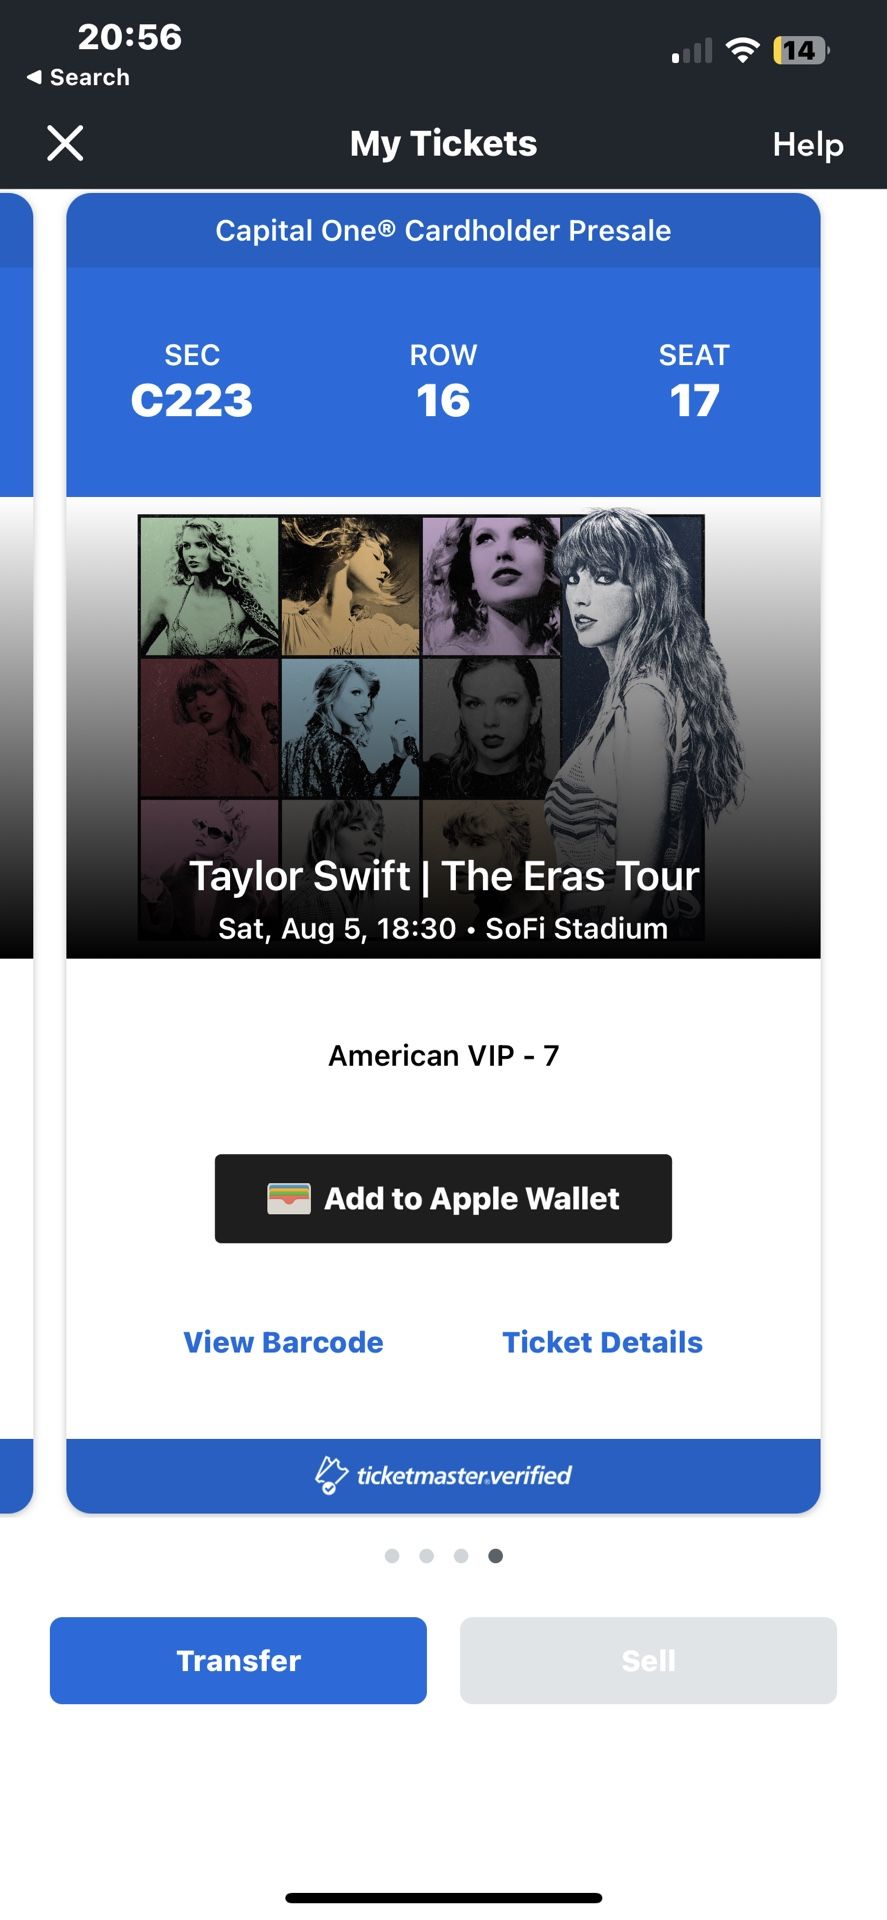 Taylor Swift Tickets C223 Row 16 Seat 16-17 $500 Each OBO